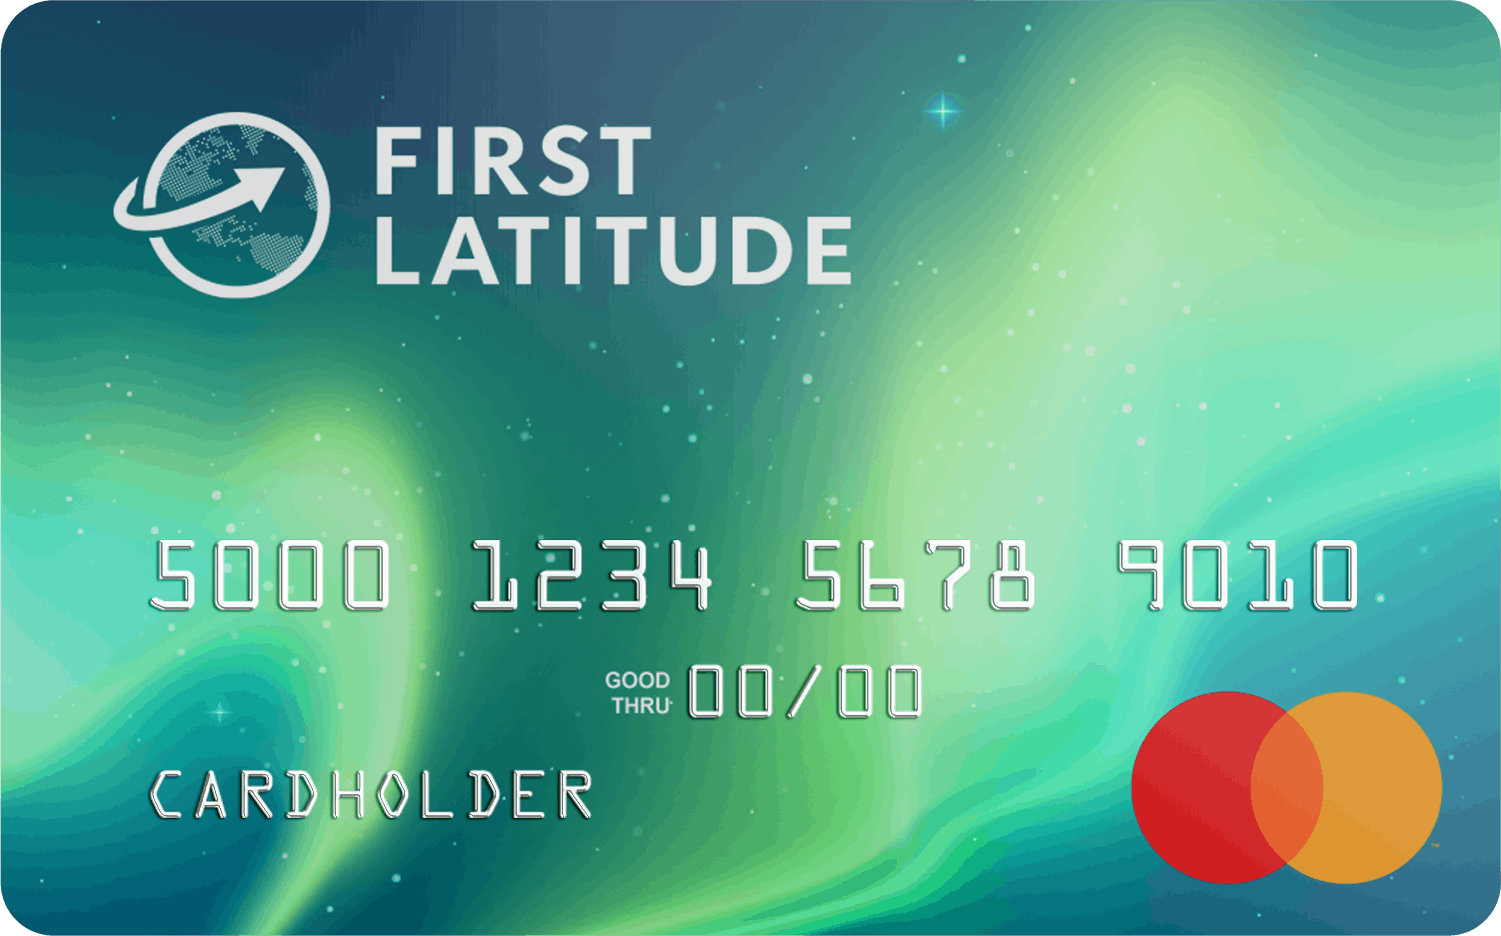 First Latitude Platinum Mastercard Secured Credit Card